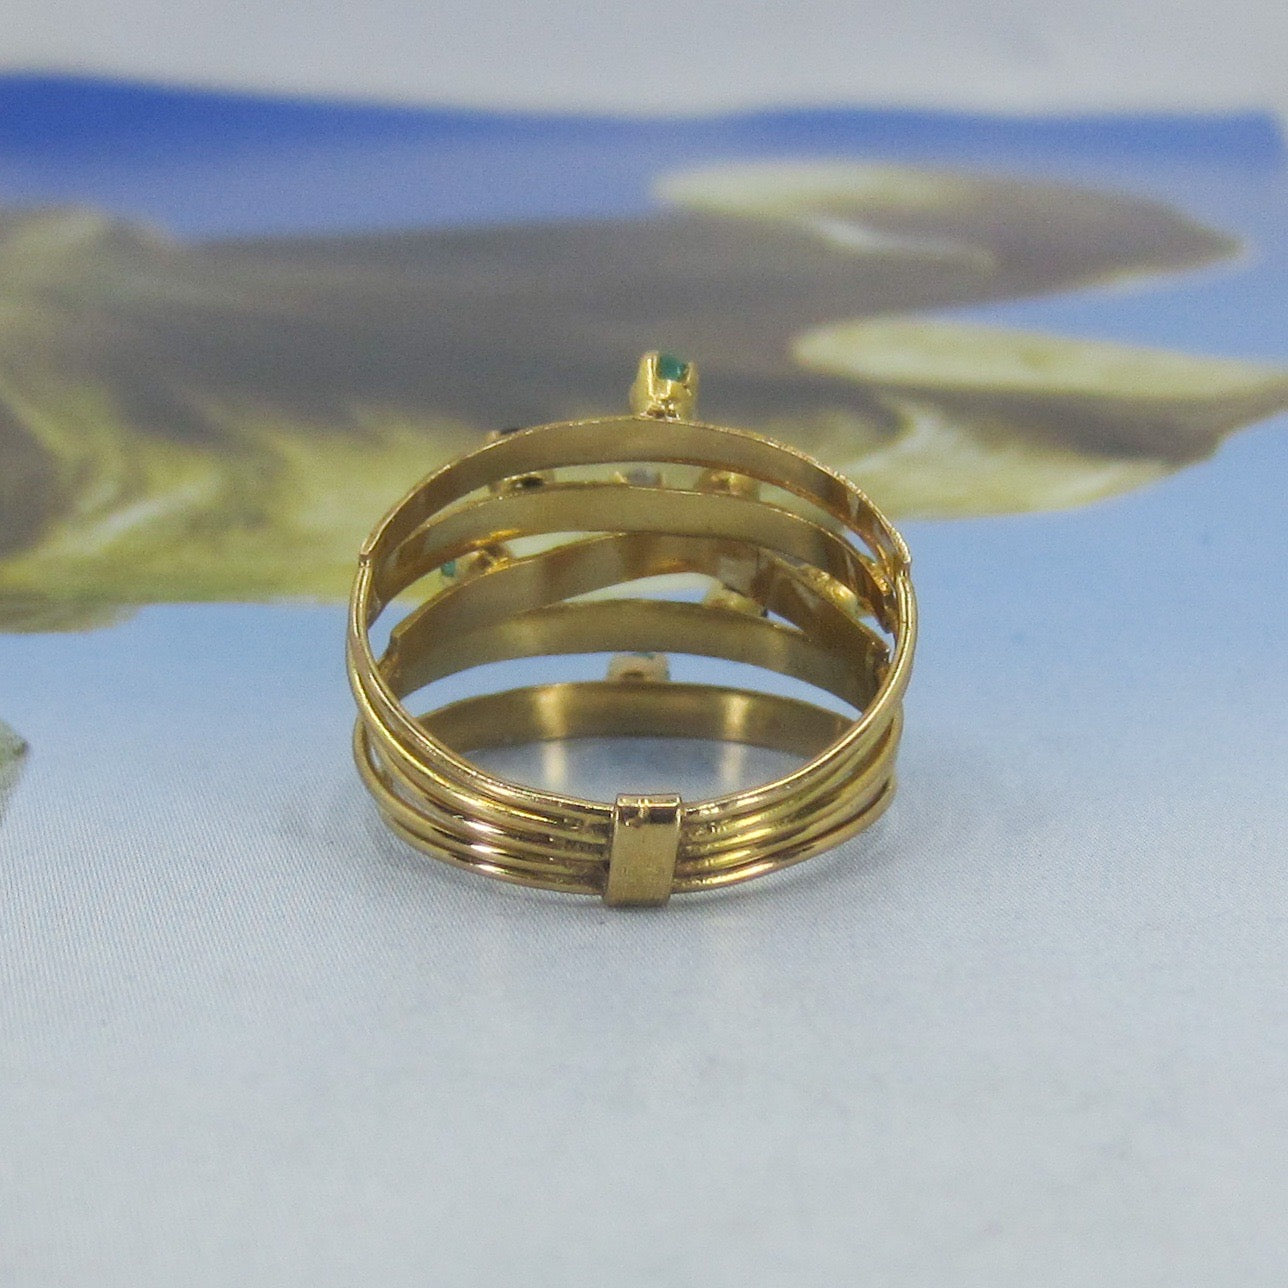 SOLD-Mid-Century Multi-Gem Harem Ring 18k, size 6 c. 1960